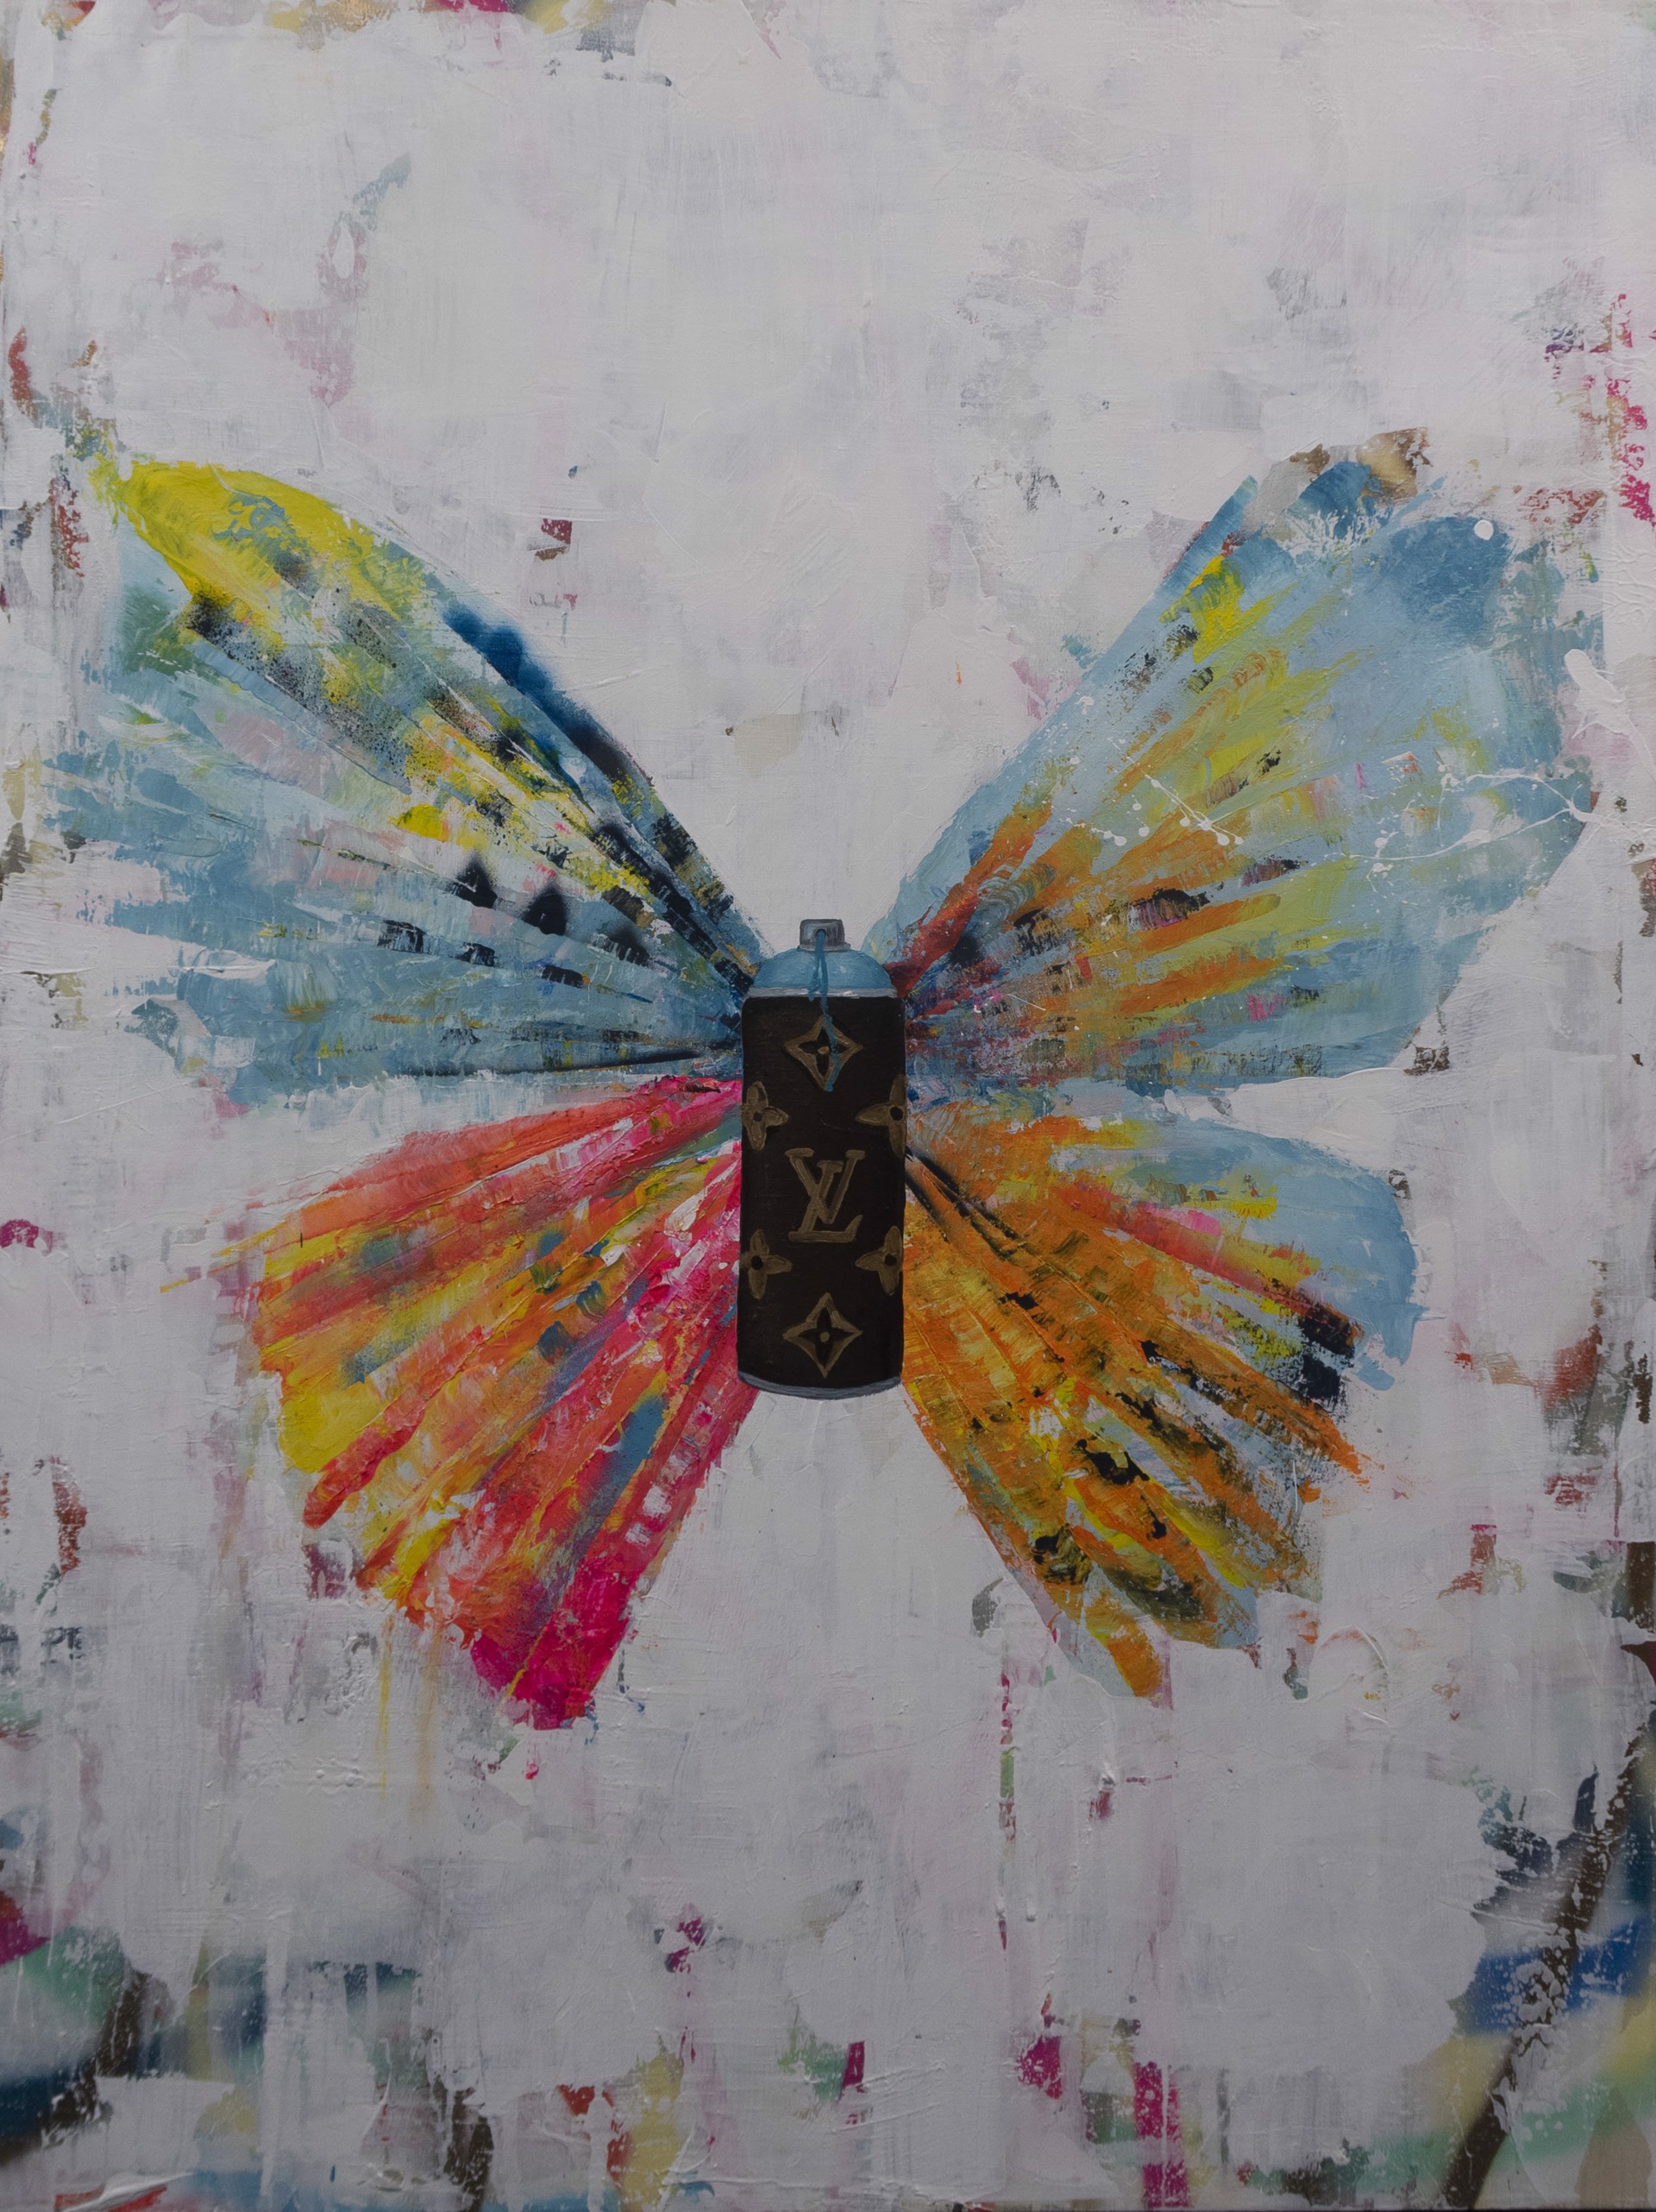 Butterfly With Spraycan by Daniel Maltzman